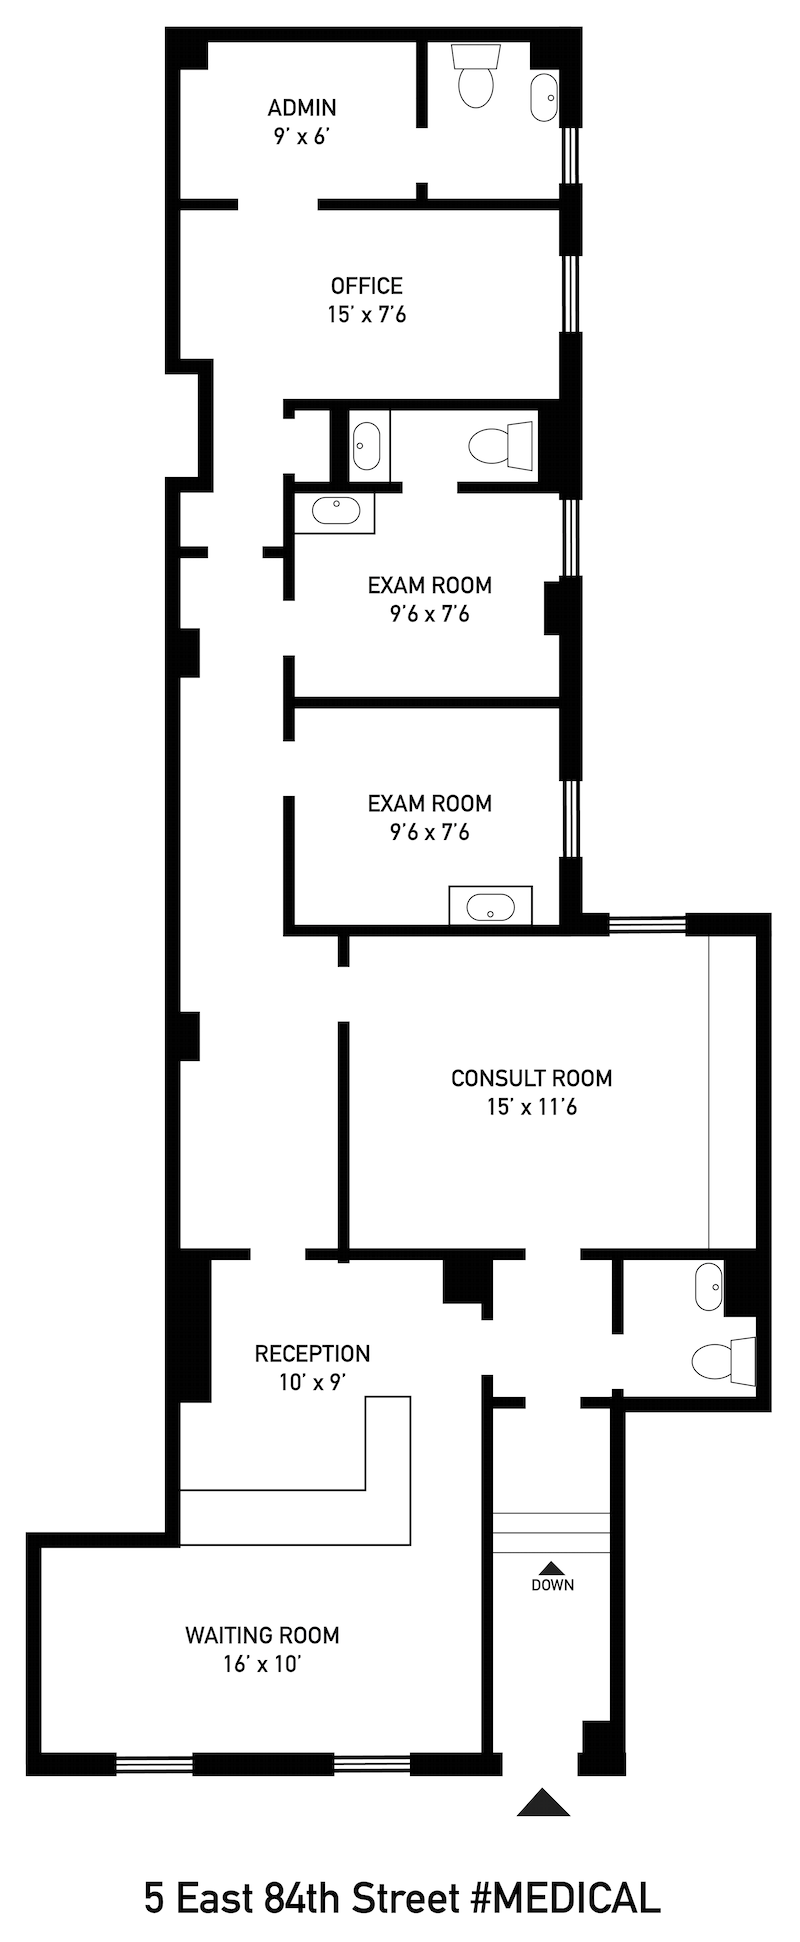 Floorplan for 5 East 84th Street, MEDICAL